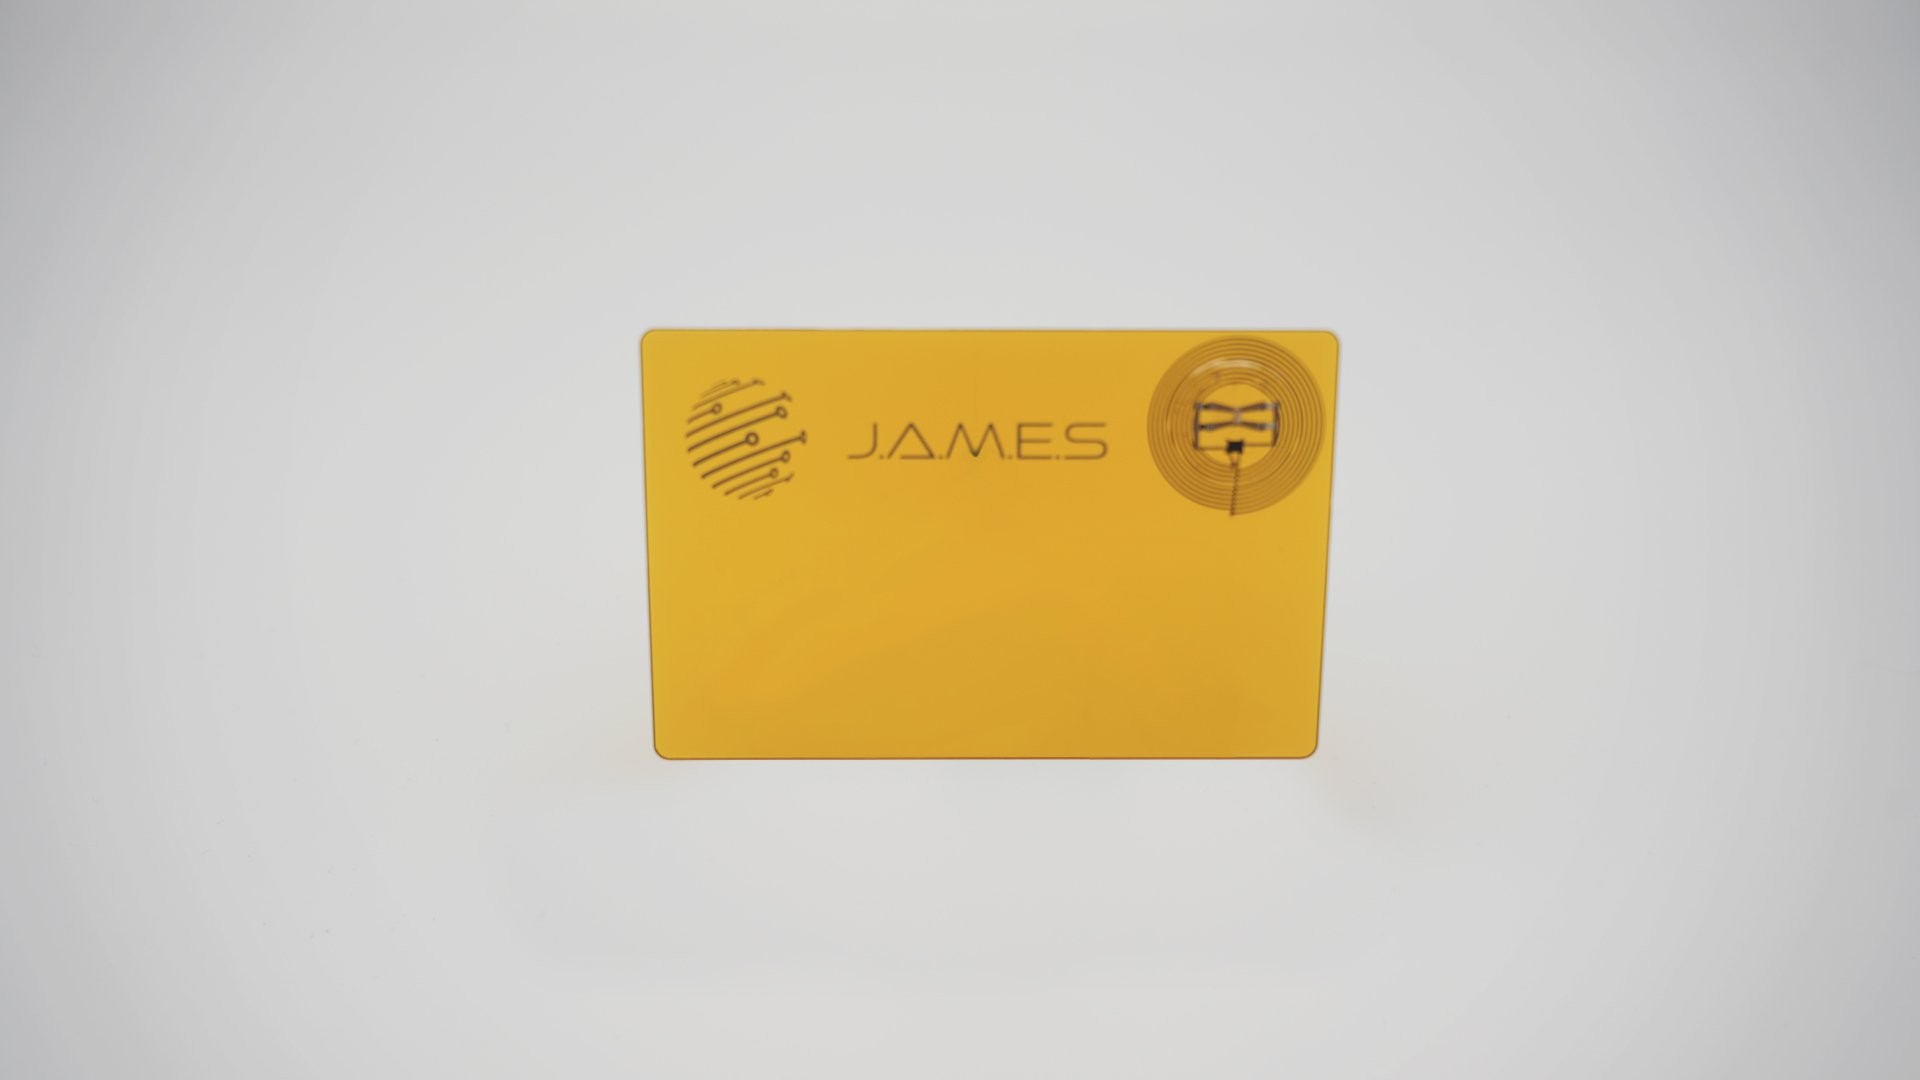 J.A.M.E.S Coin NFC Business Card